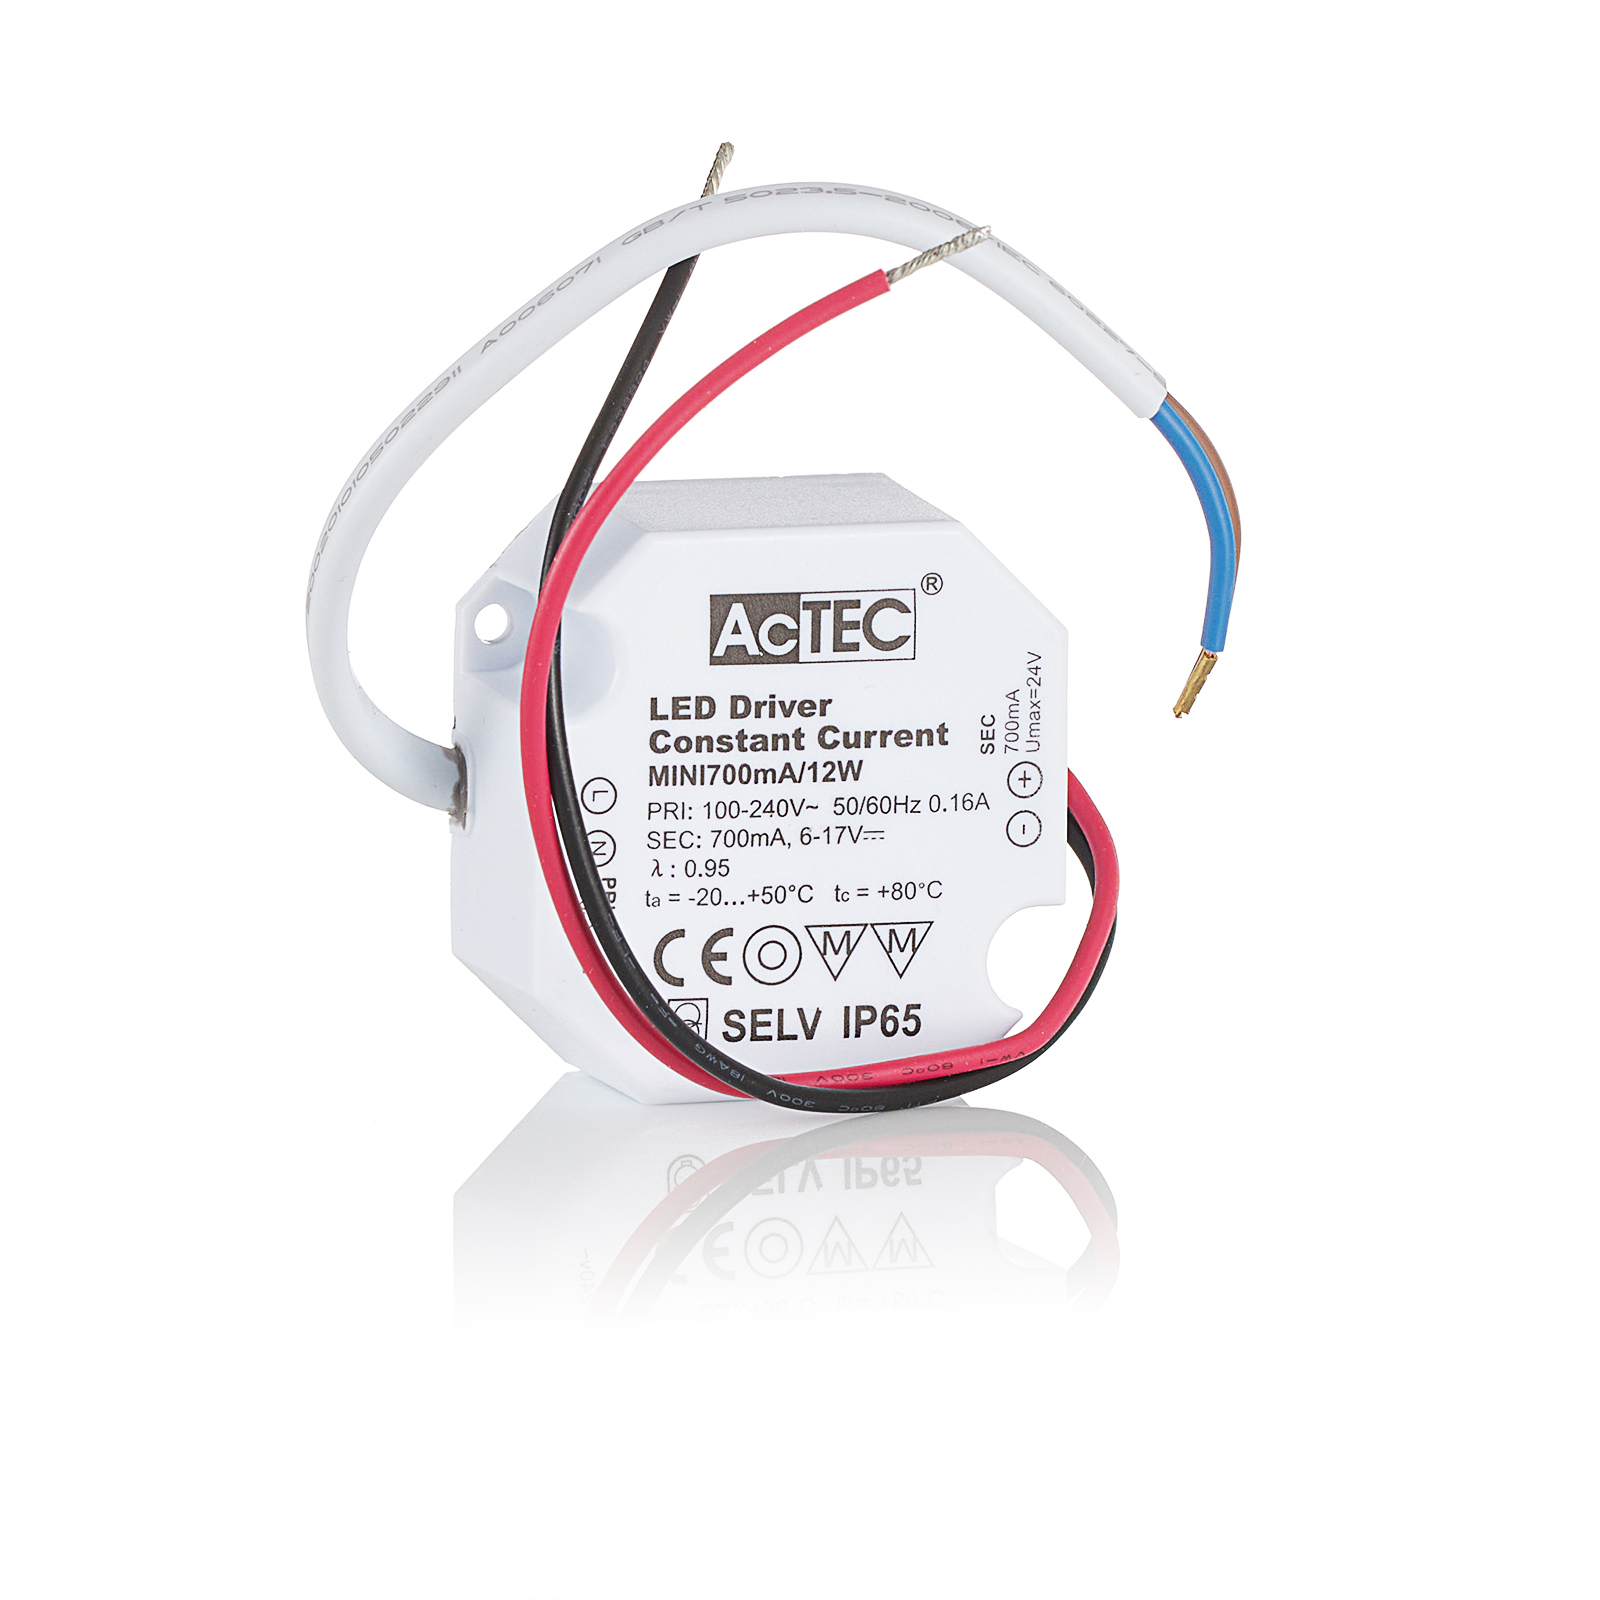 AcTEC Mini LED-driver CC 700mA, 12W, IP65